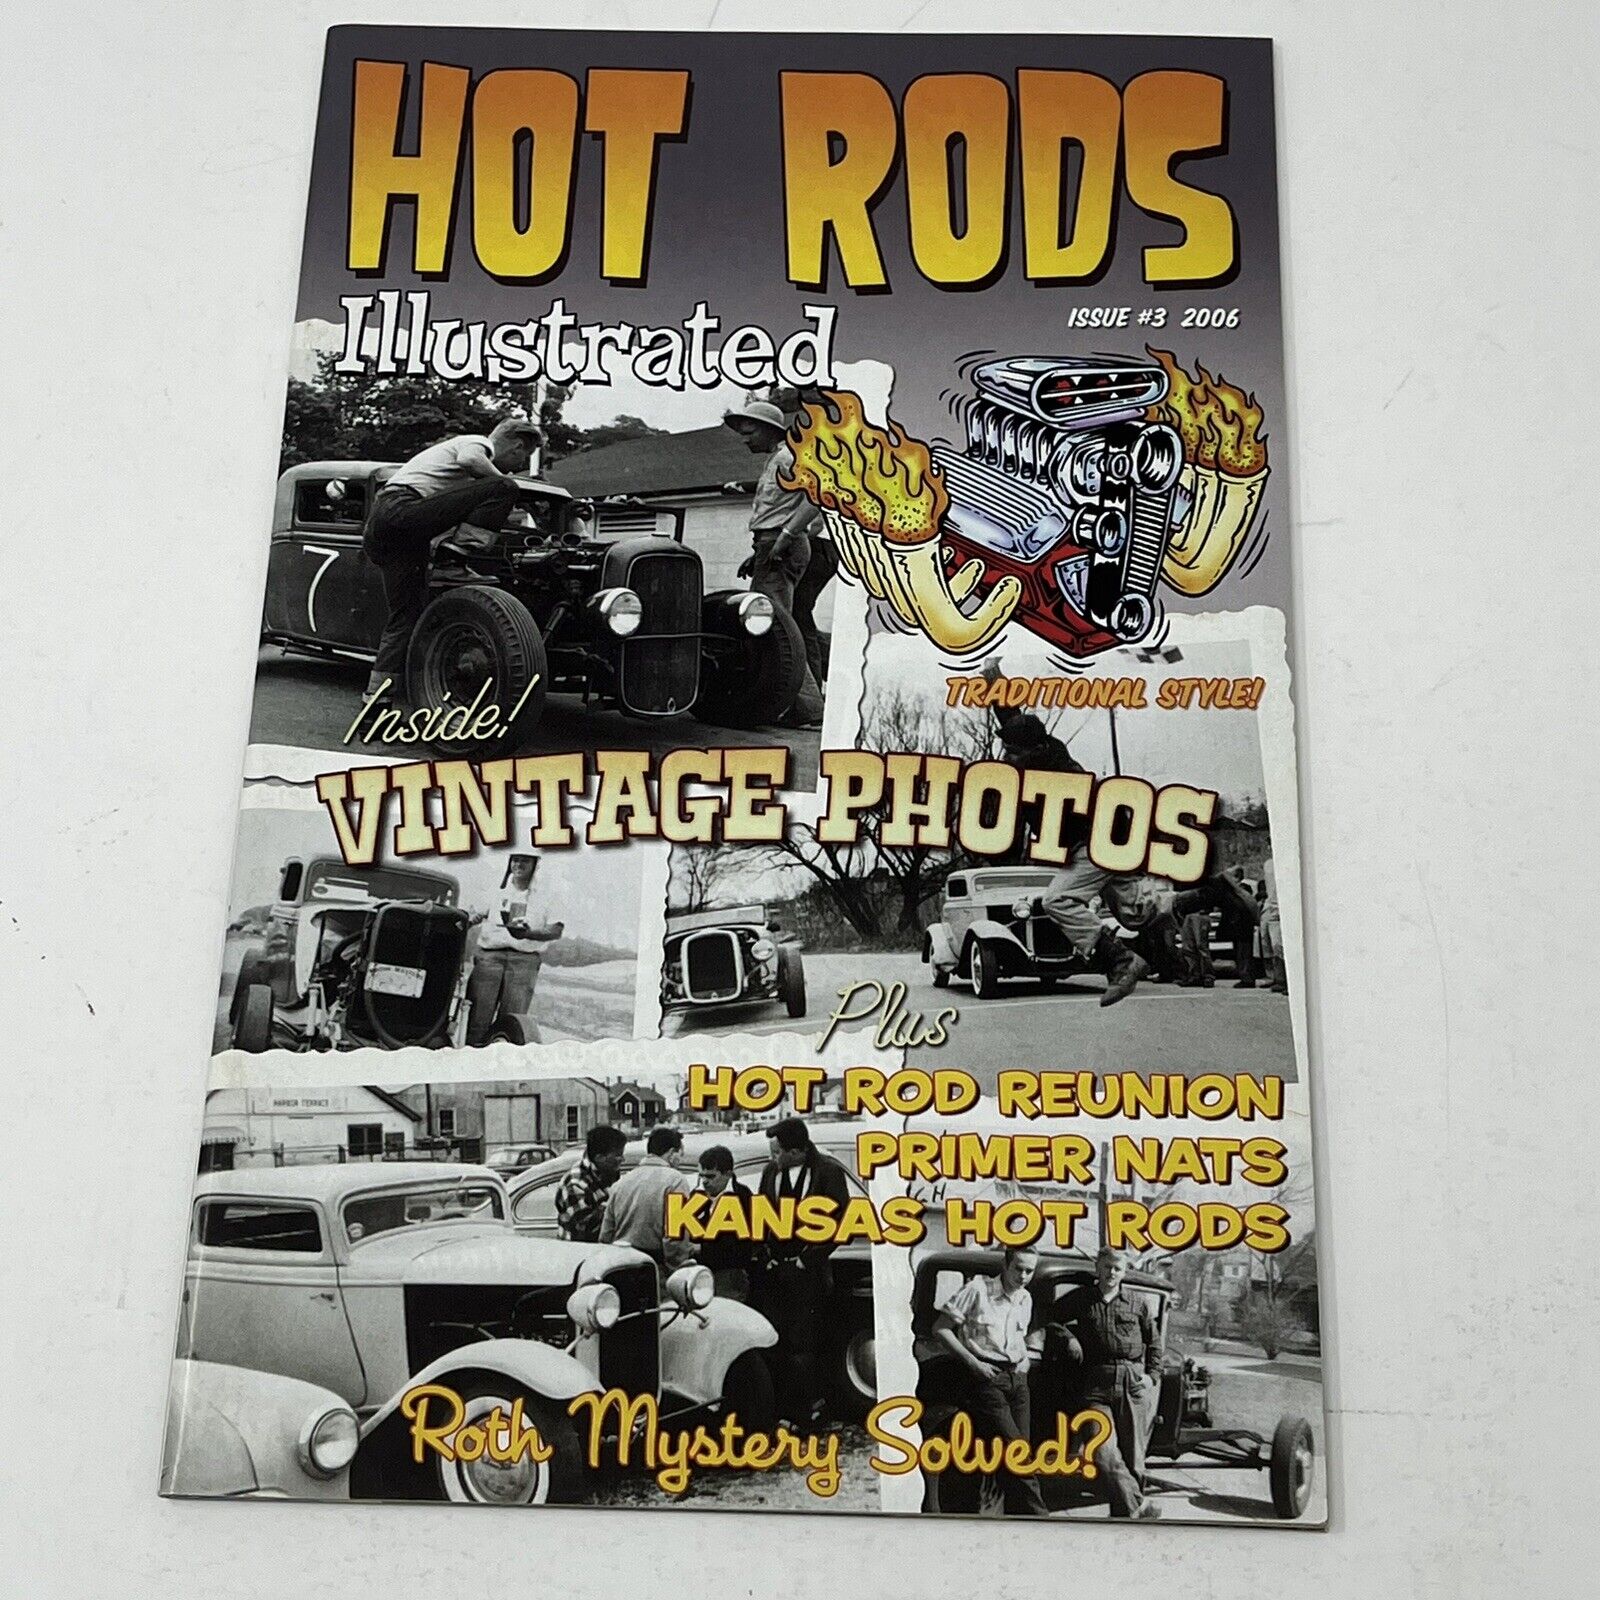 2006 Hot Rods Illustrated Magazine Joe Mazza Roadster Vintage Photos Primer Nats